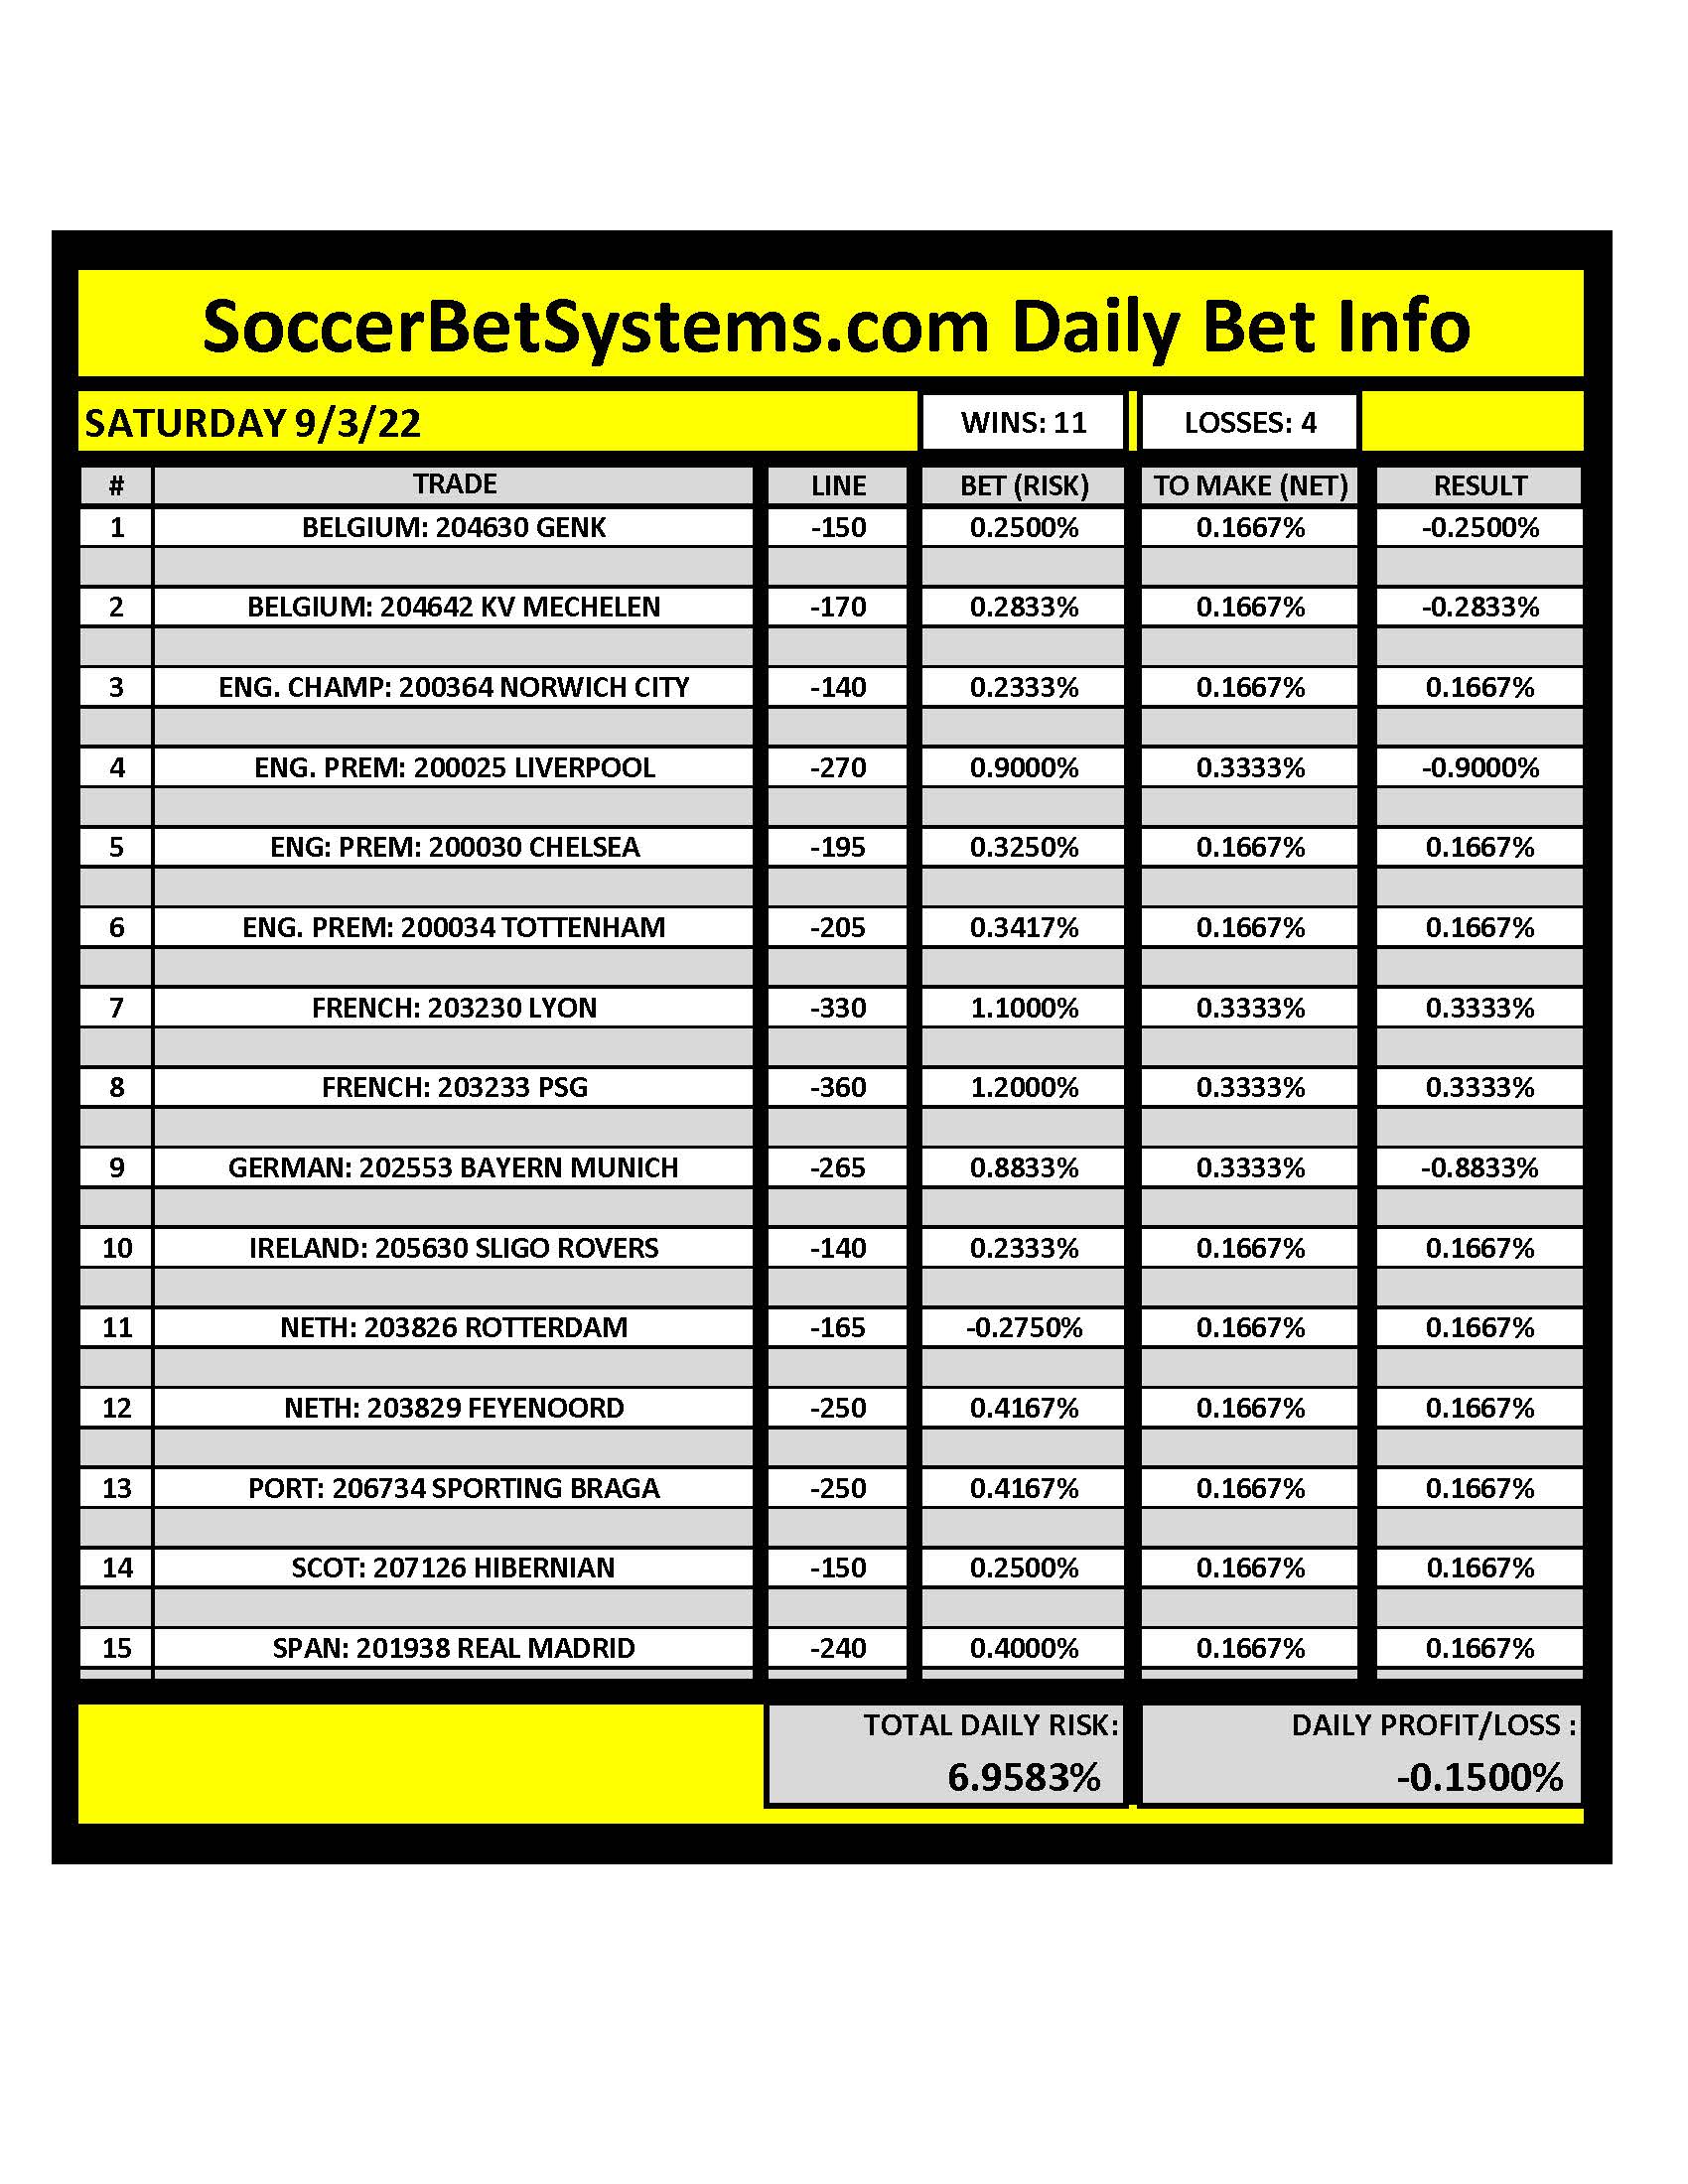 SoccerBetSystems.com 9/3/22 Daily Results